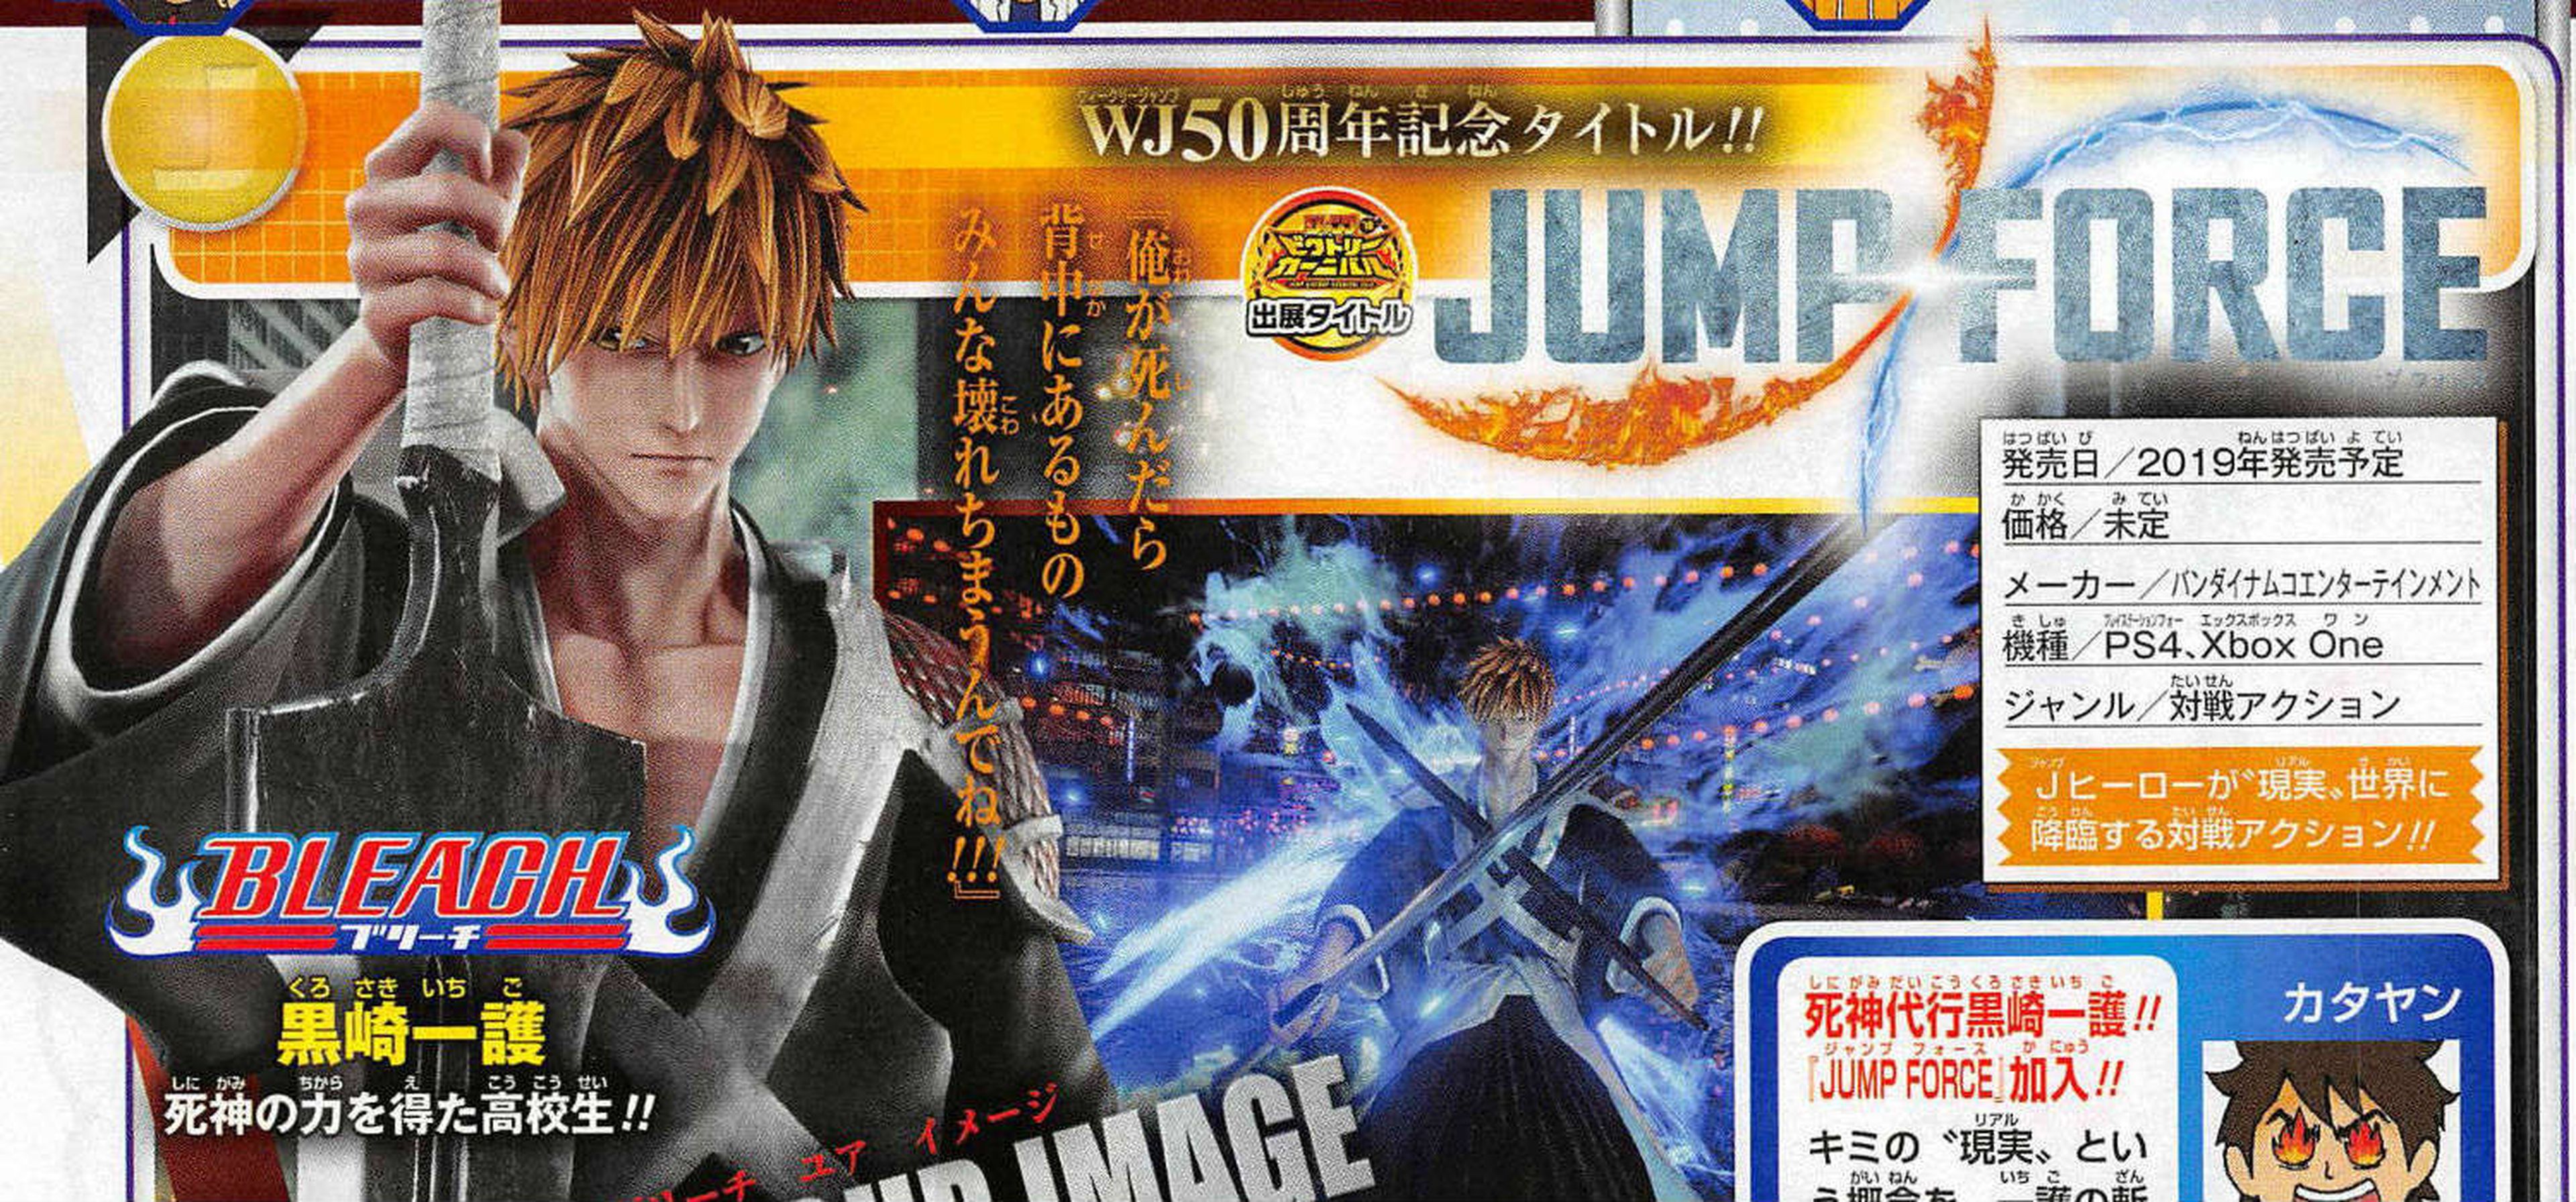 Ichigo, de Bleach, será un personaje jugable en Jump Force